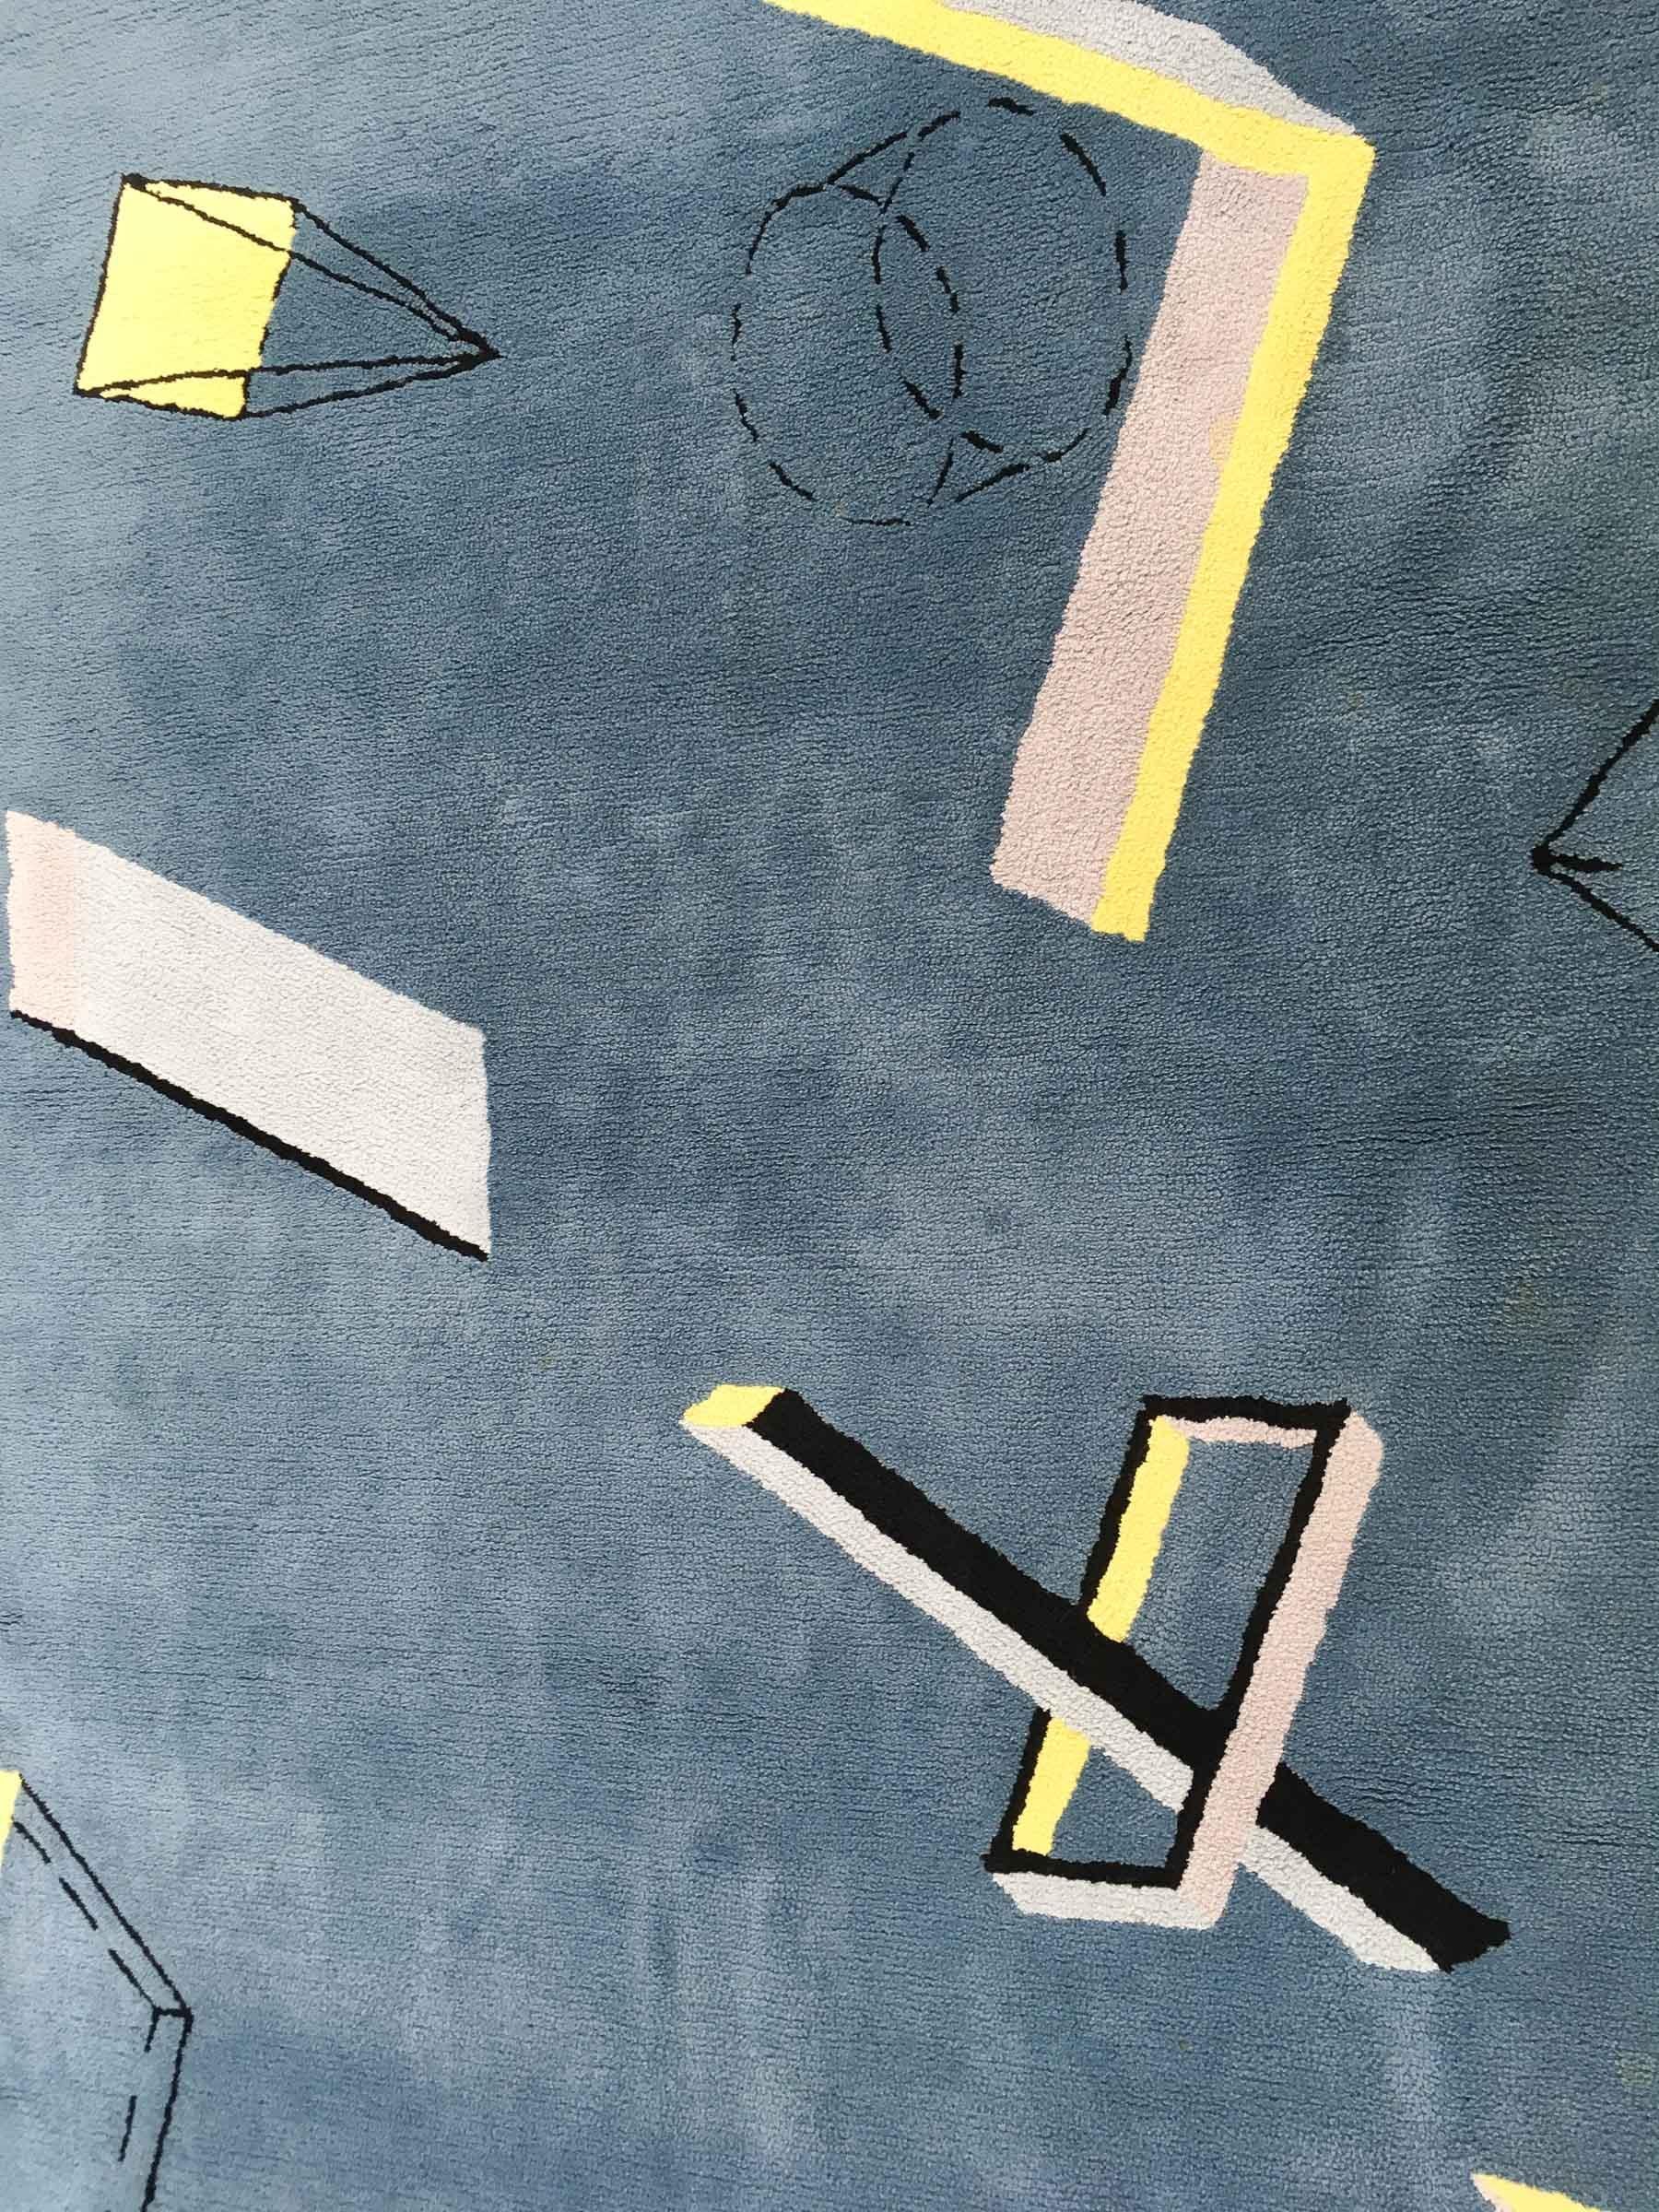 German Bauhaus Memphis Art Architectural Geometric Wool Carpet/Rug, Blue Yellow Grey  For Sale